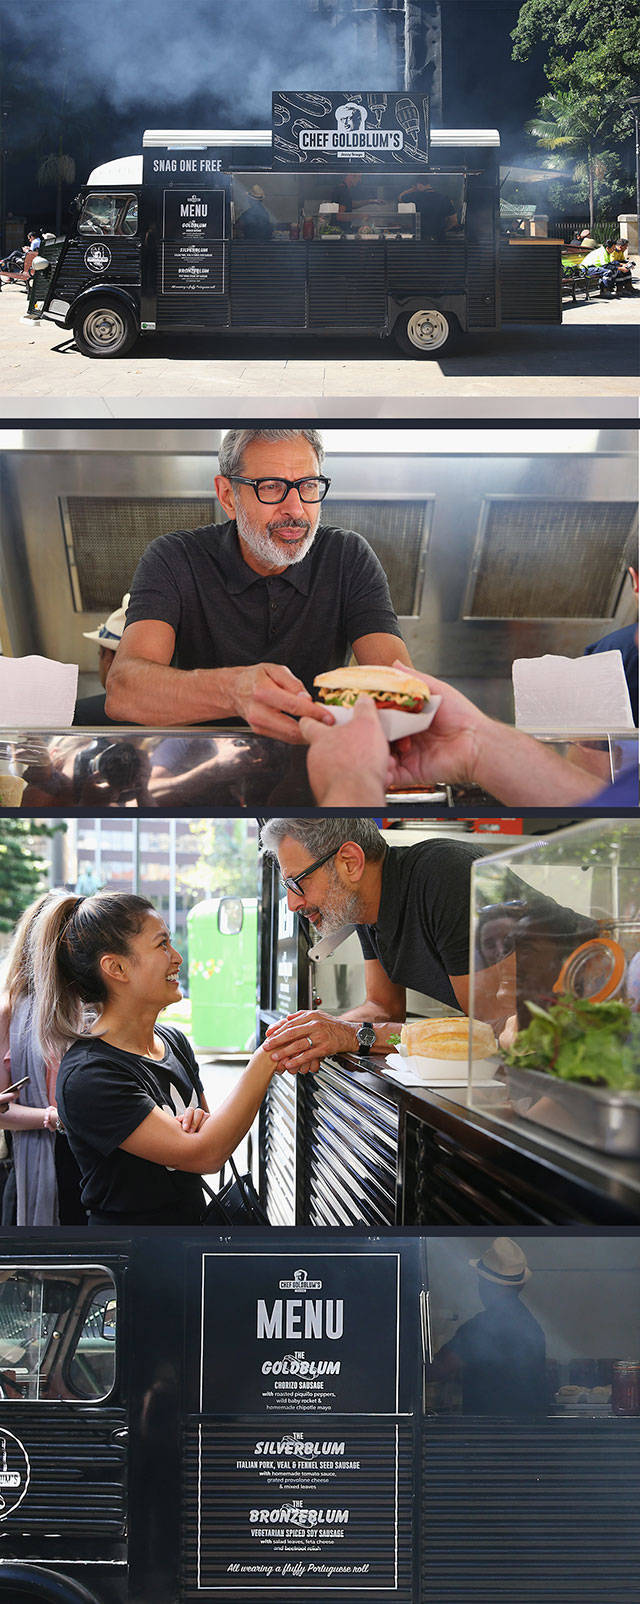 Amazing food truck in LA that is Chef Goldblum and run by Jeff Goldblum